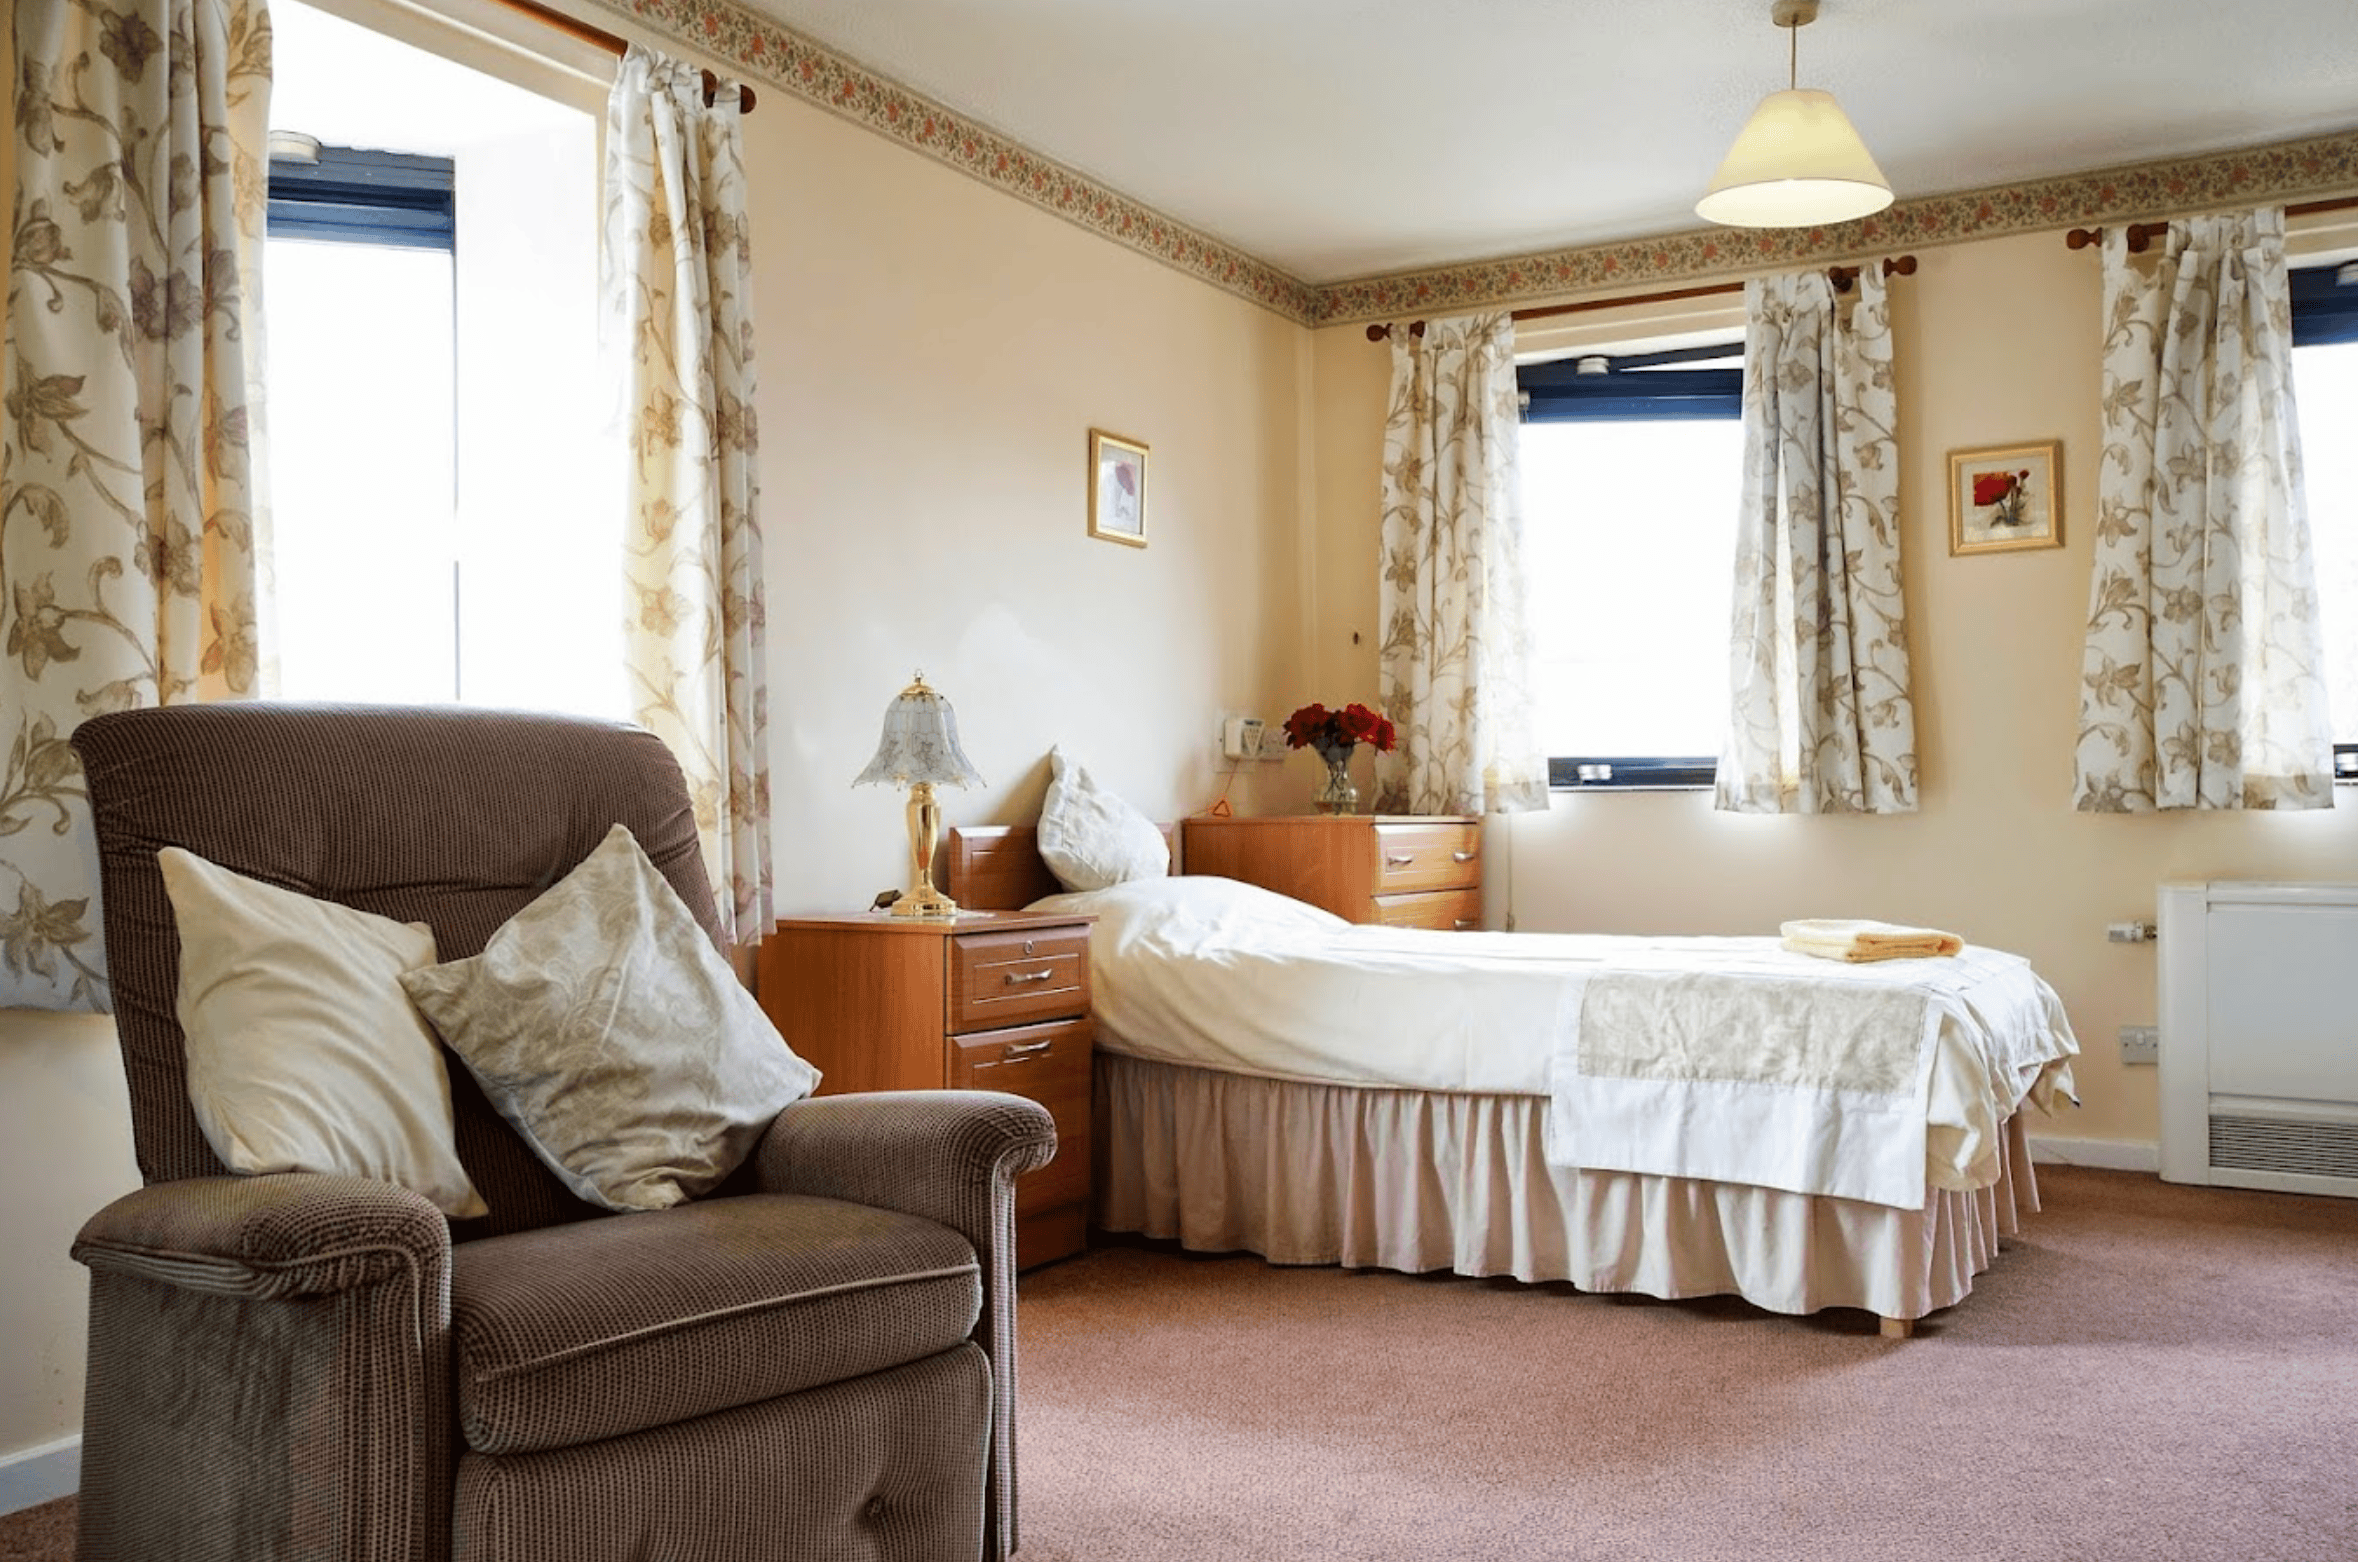 Bedroom at Shaftesbury Court, Erith, Kent